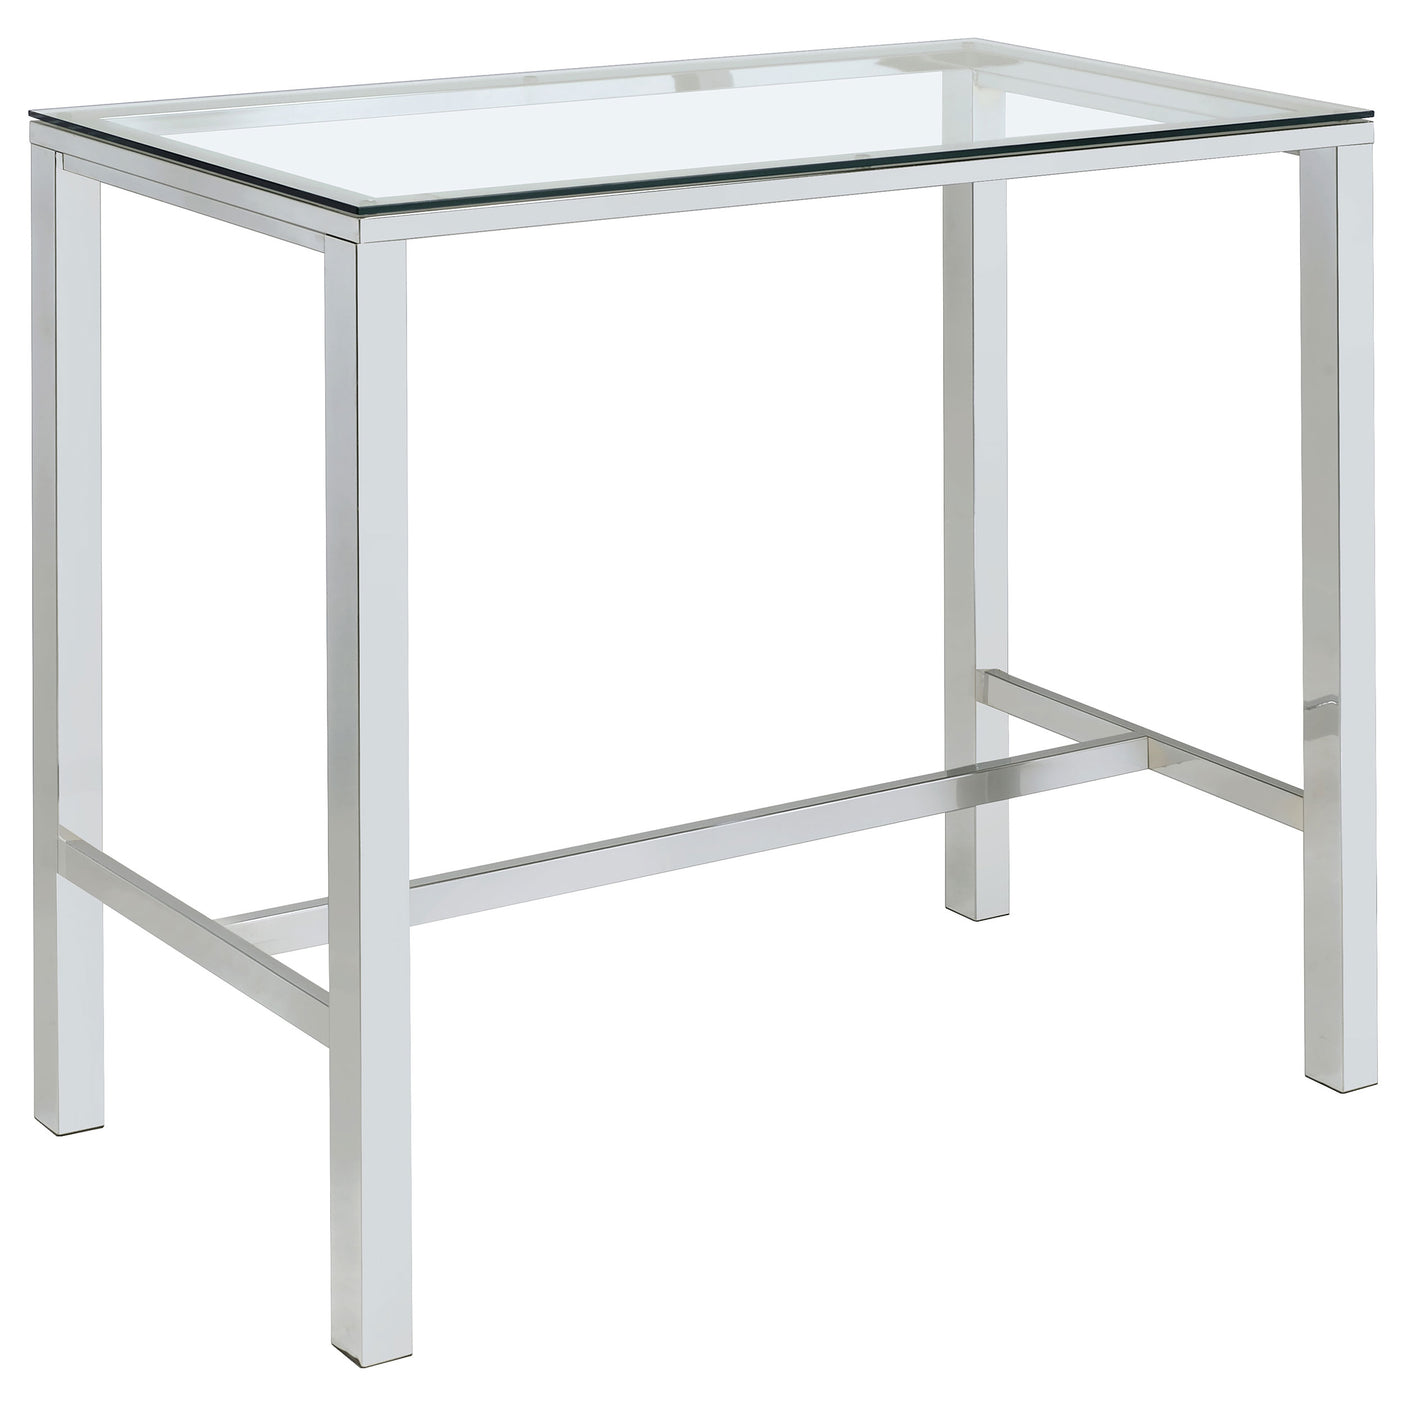 Bar Table - Tolbert Bar Table with Glass Top Chrome